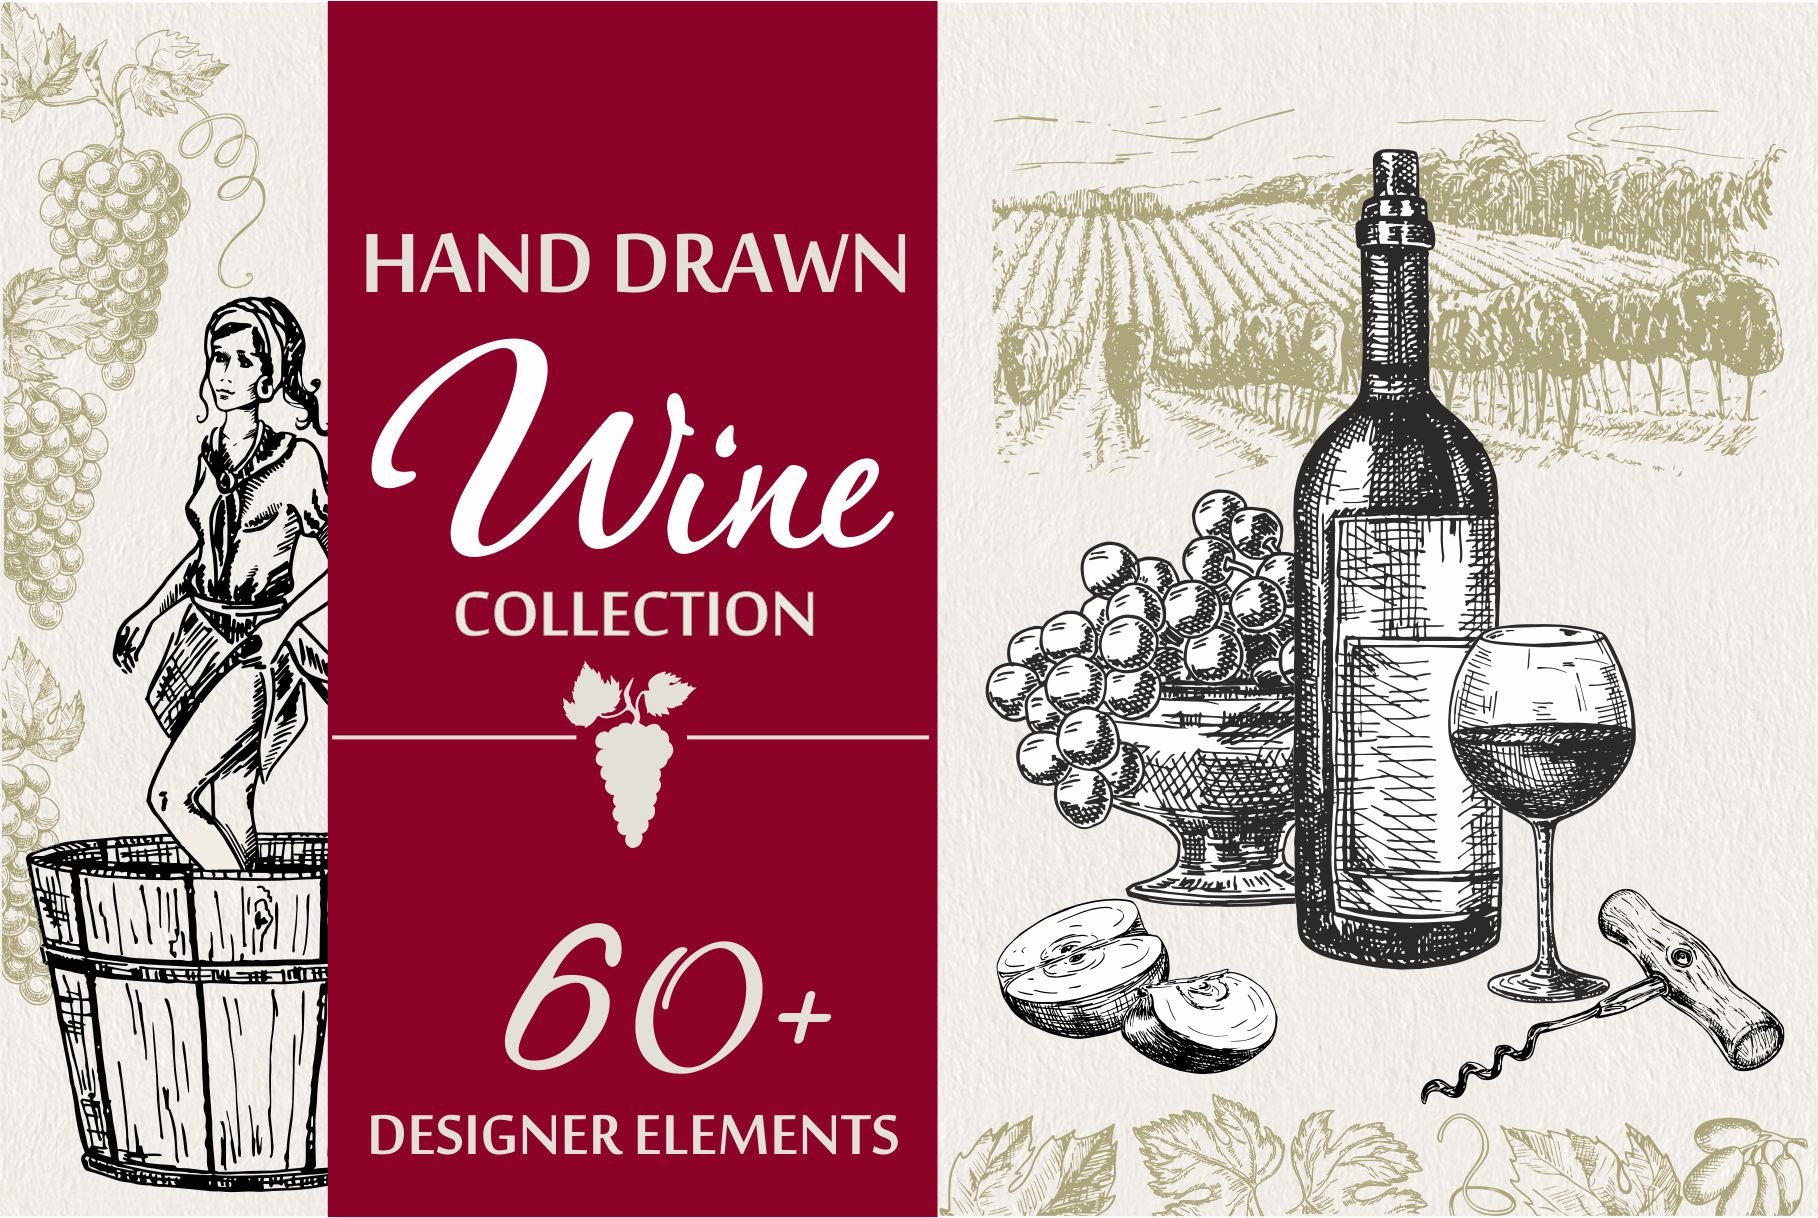 Wine & Grapes Illustations Set cover image.